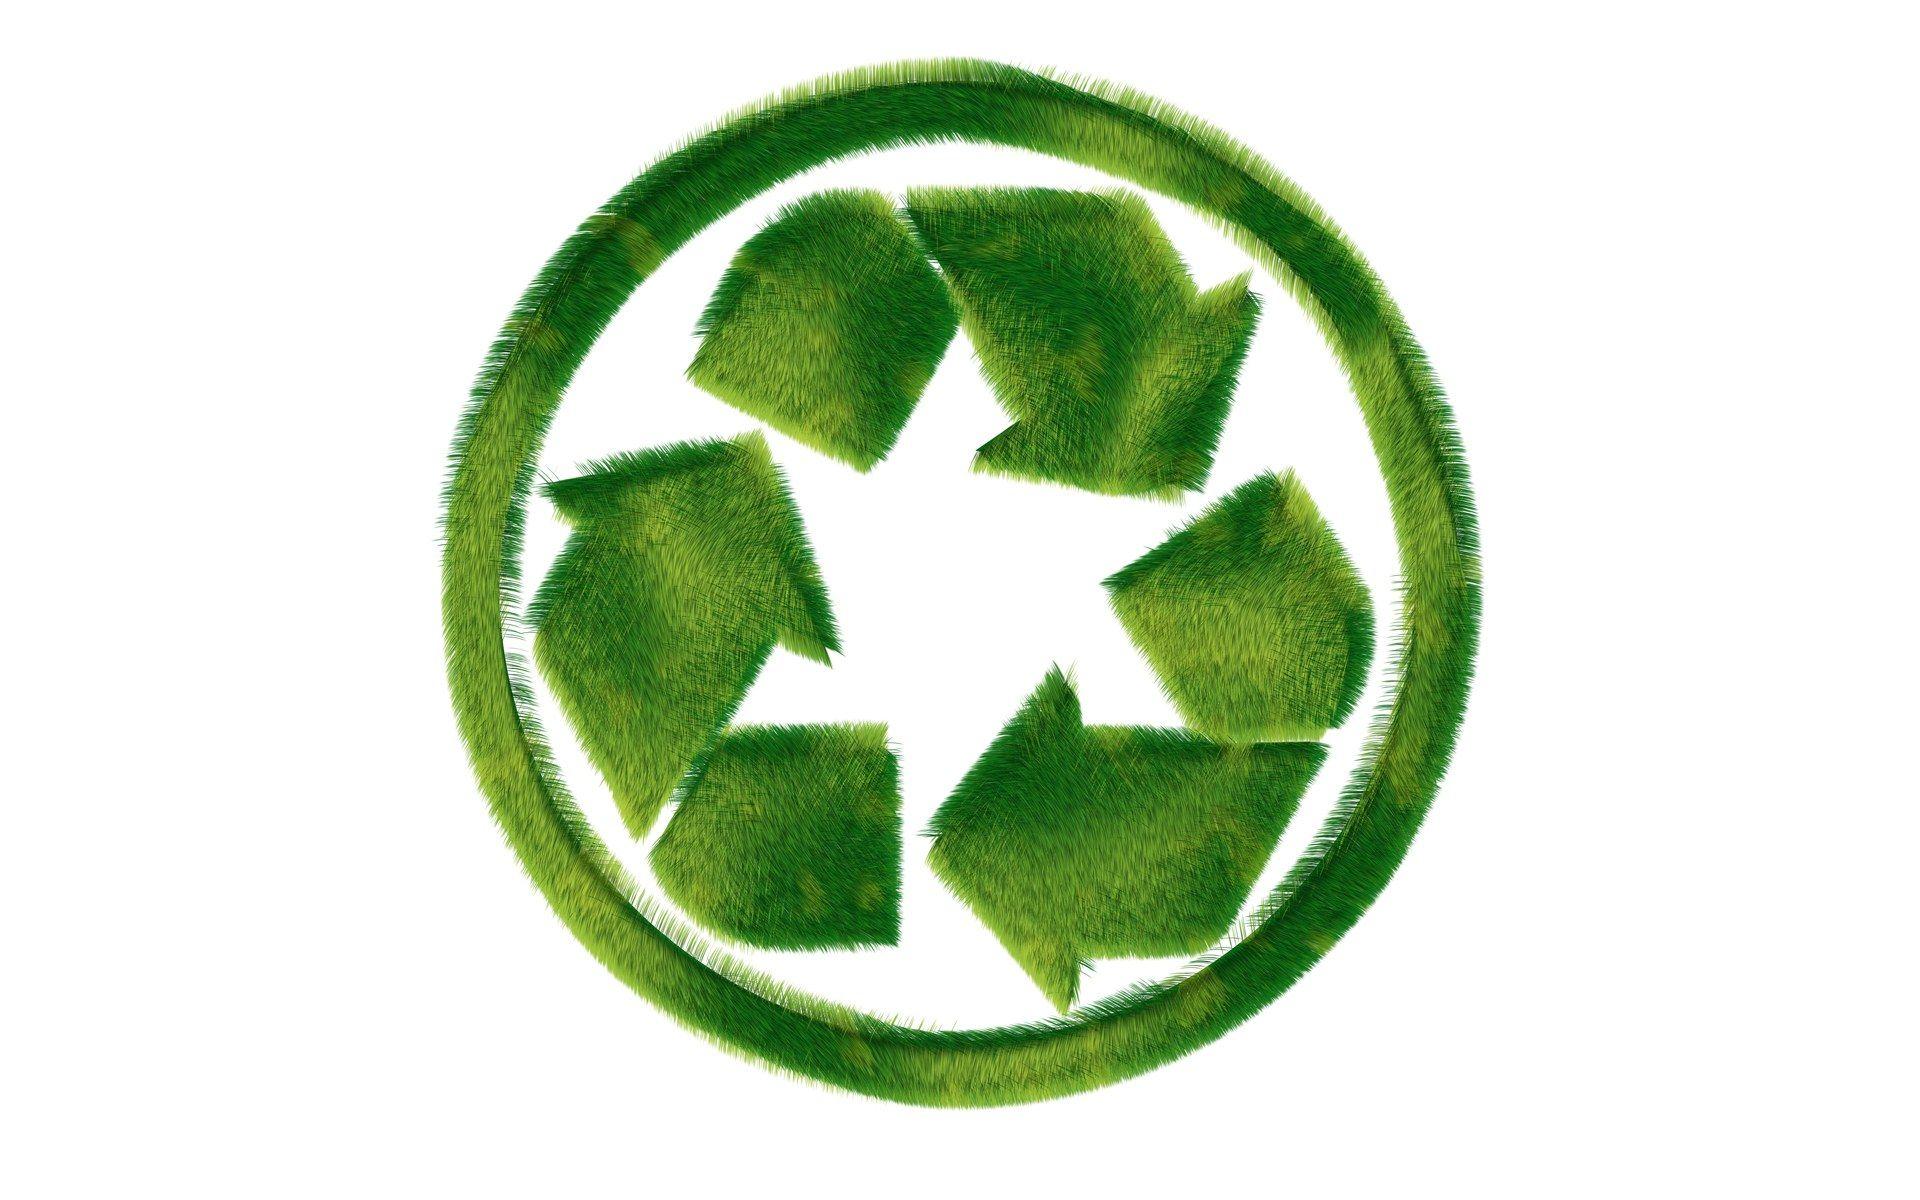 Greenpeace symbols recycle sign 01 Wallpaper Wallpaper 74762